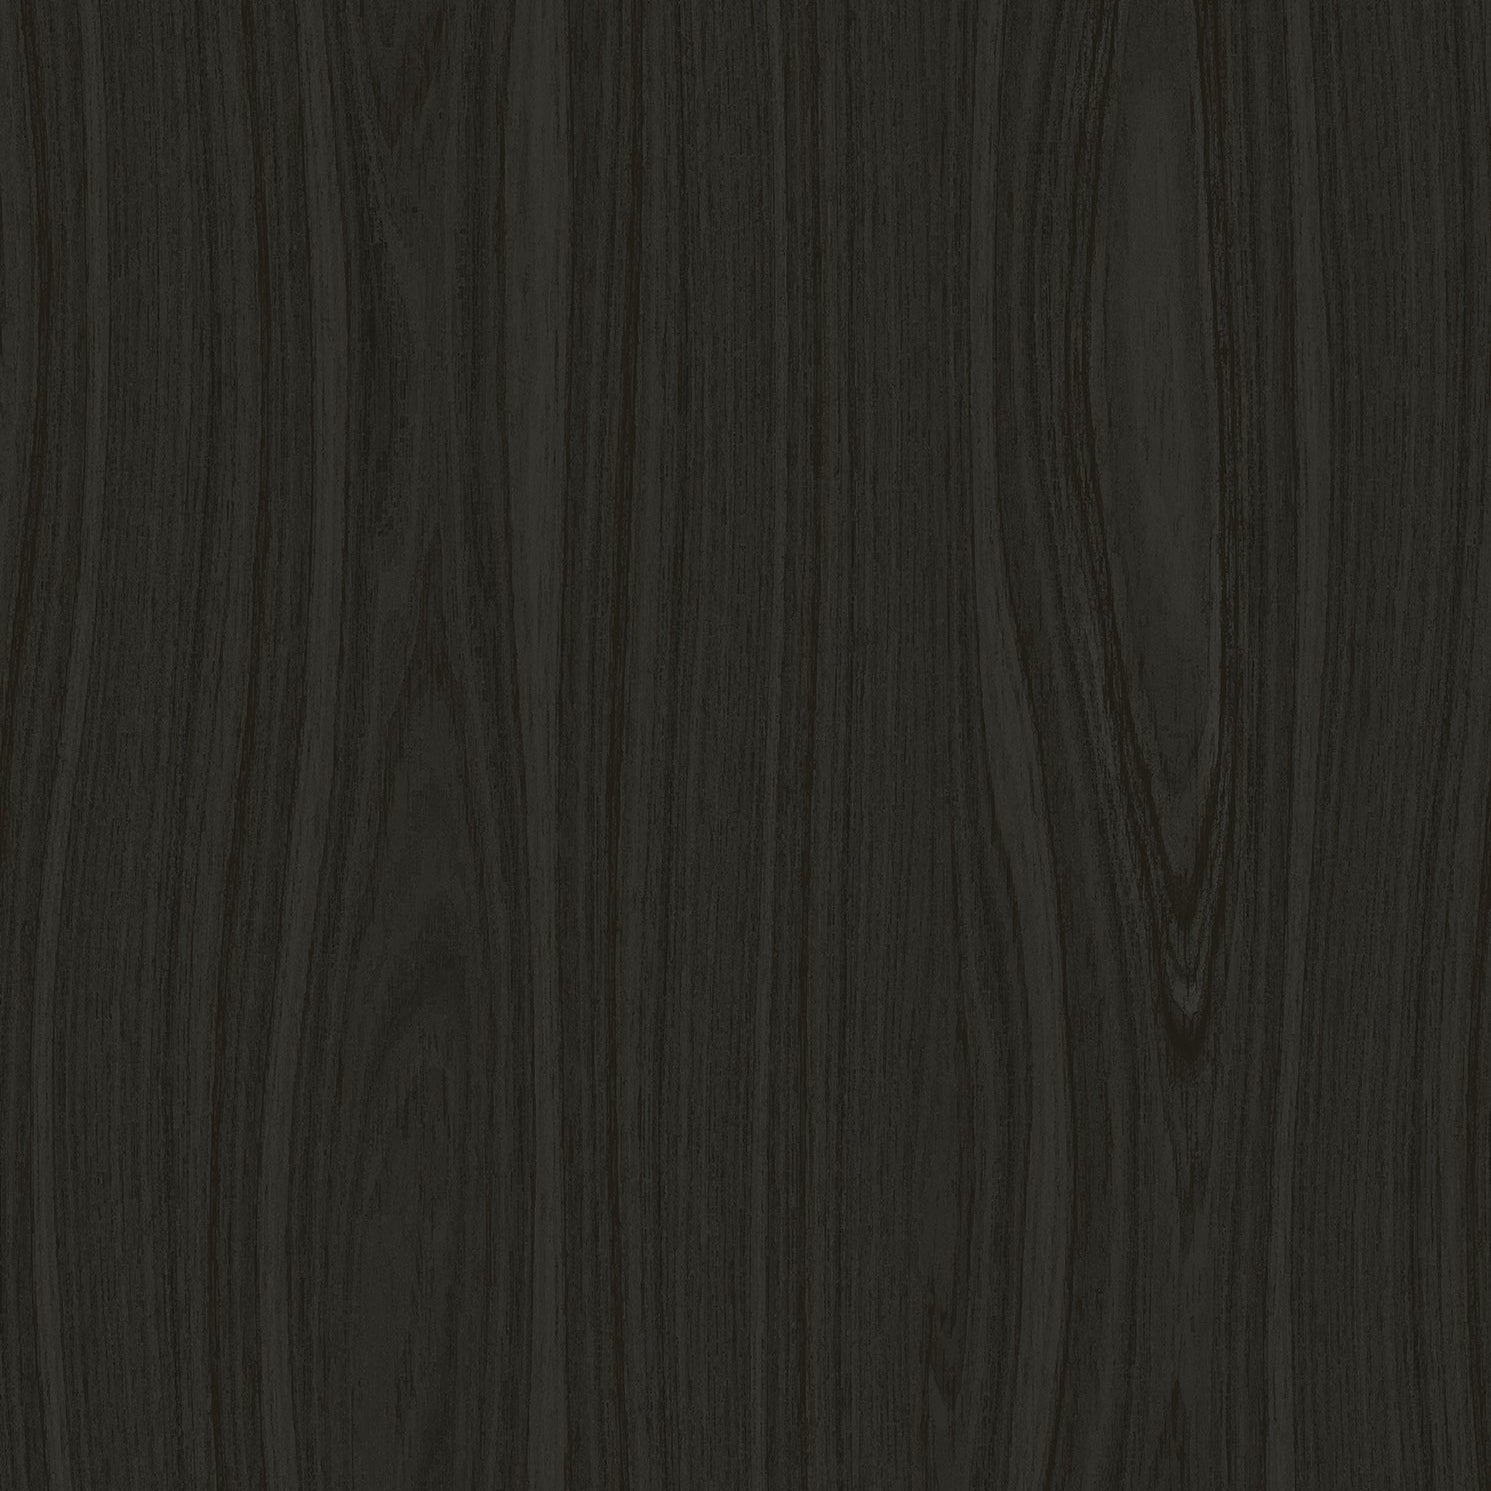 Shop 2959-SDM10604 Textural Essentials Jaxson Dark Brown Faux Wood Brown Brewster Wallpaper